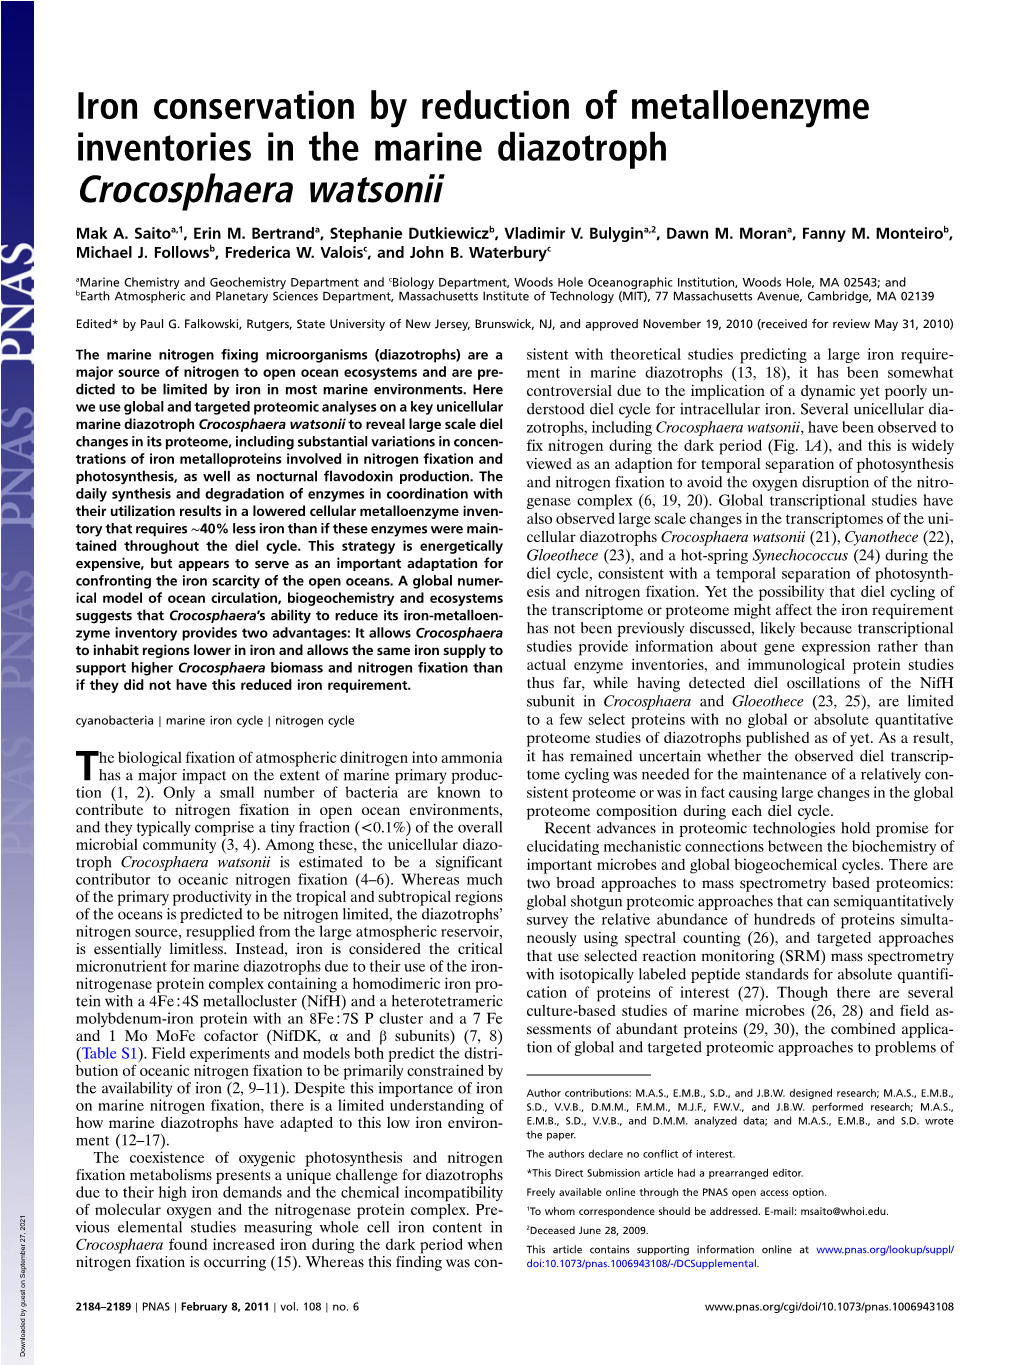 Crocosphaera Watsonii